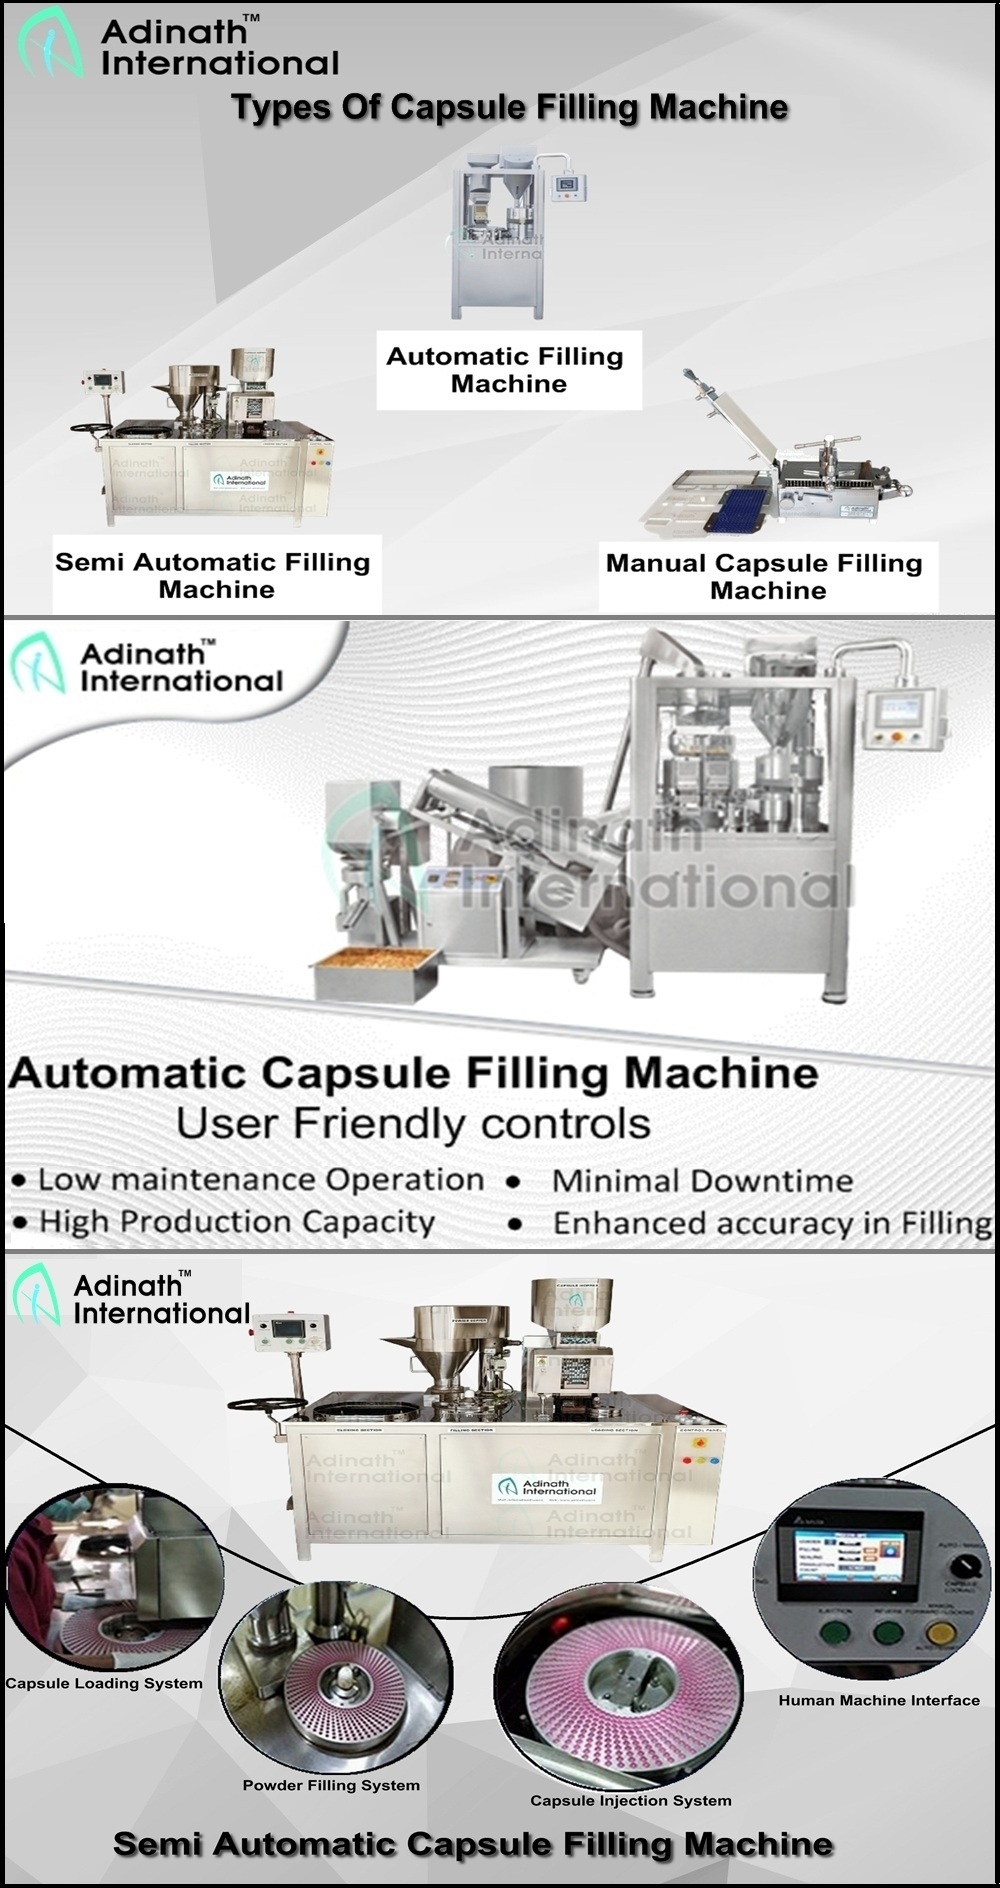 Manual, Semi Automatic and Automatic Capsule Filling Machines